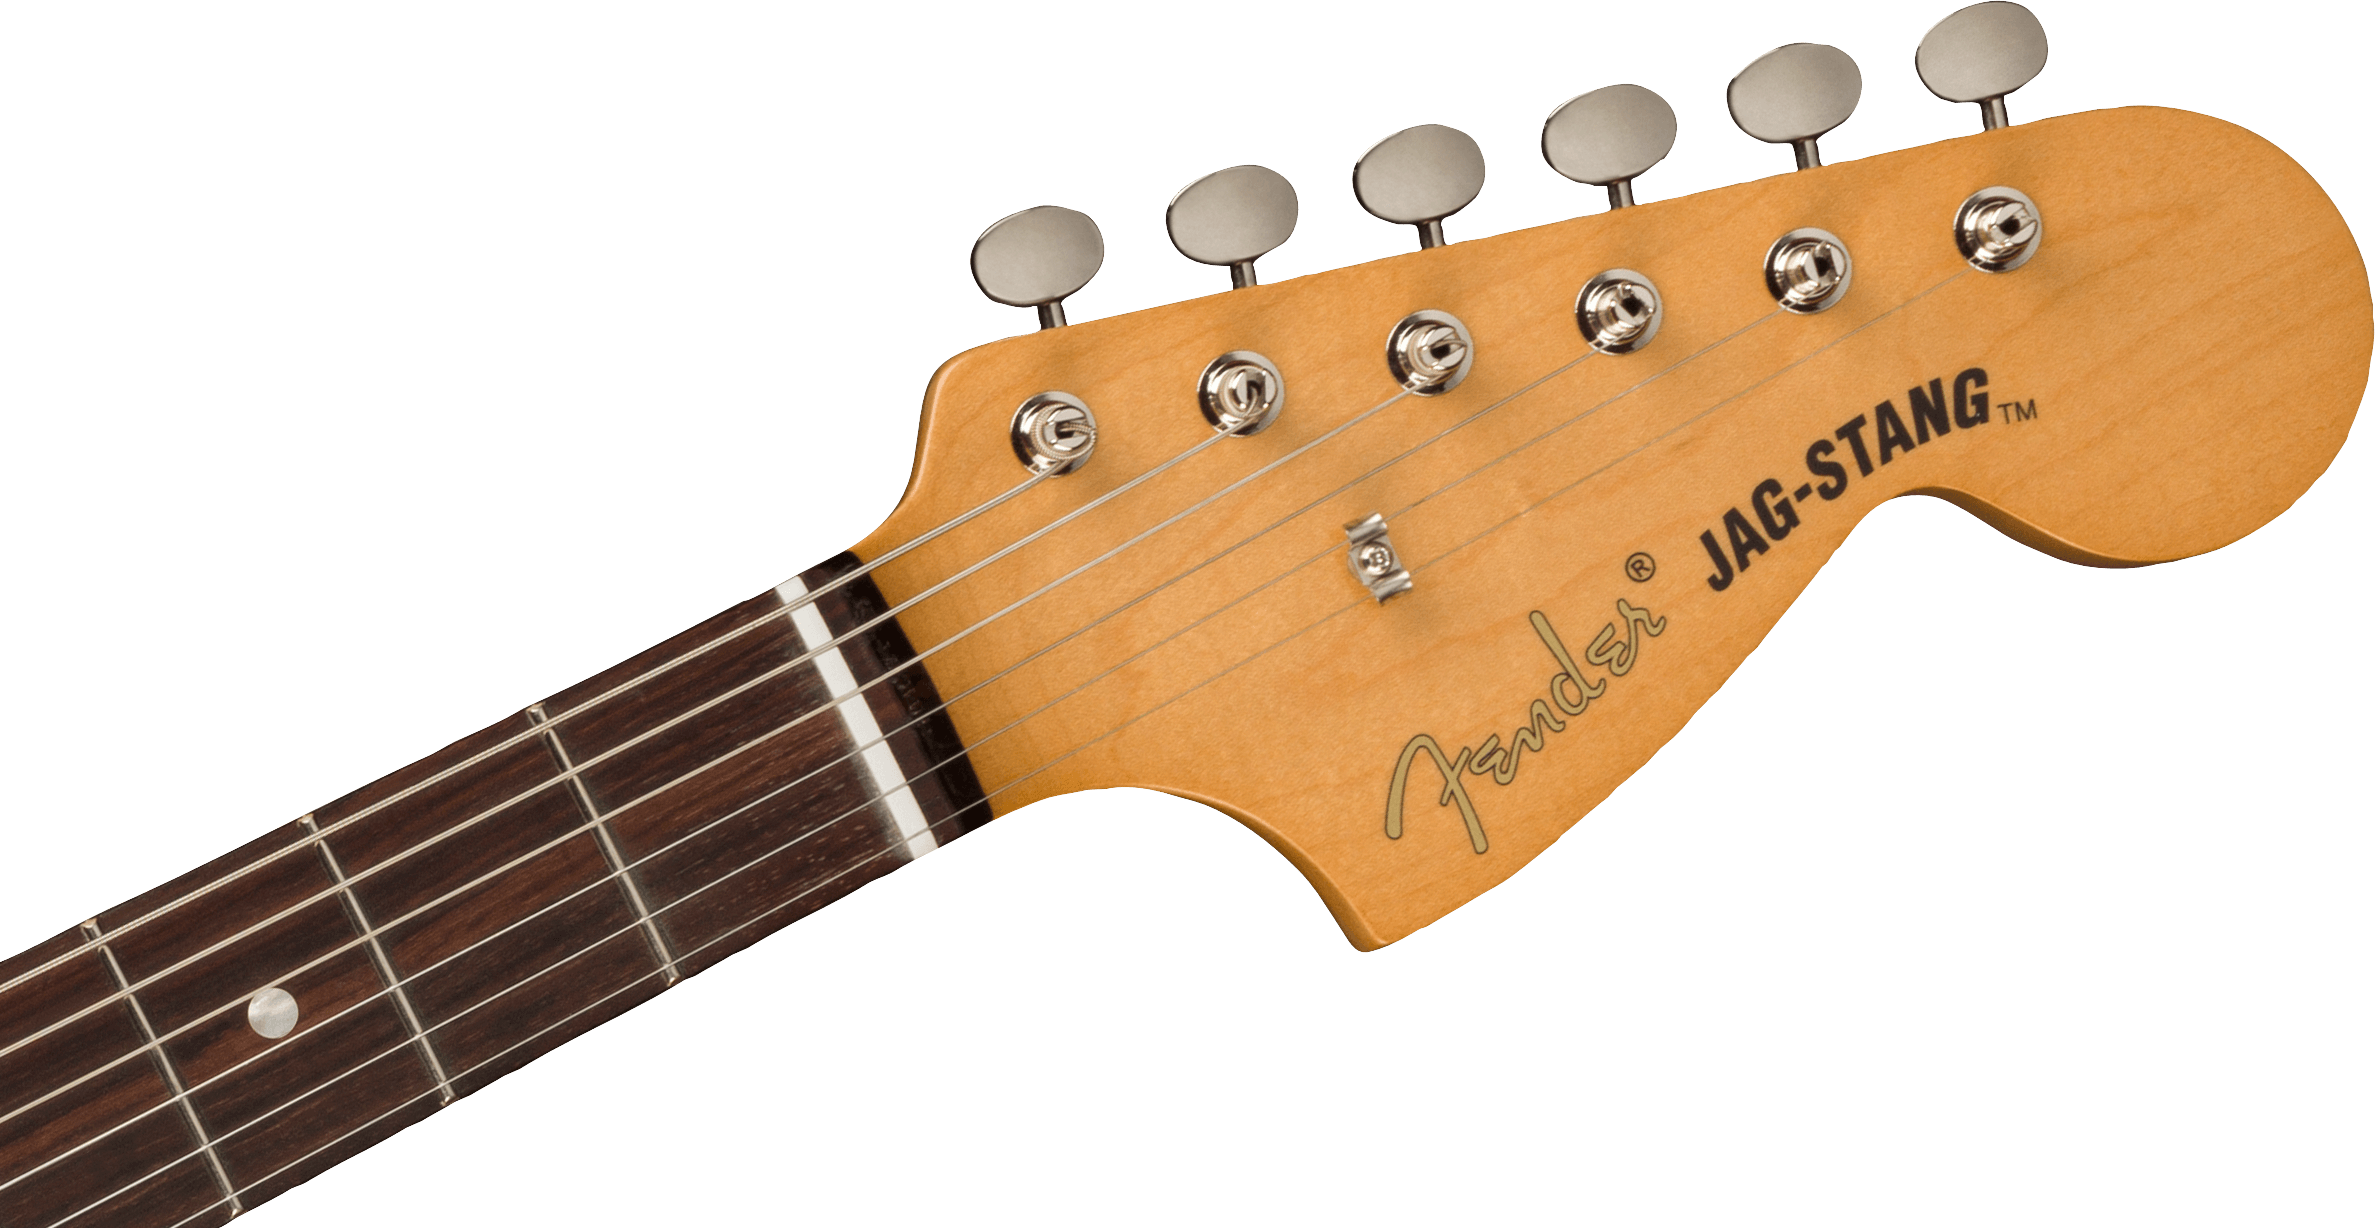 Fender Jag-stang Kurt Cobain Artist Hs Trem Rw - Fiesta Red - Retro rock electric guitar - Variation 4